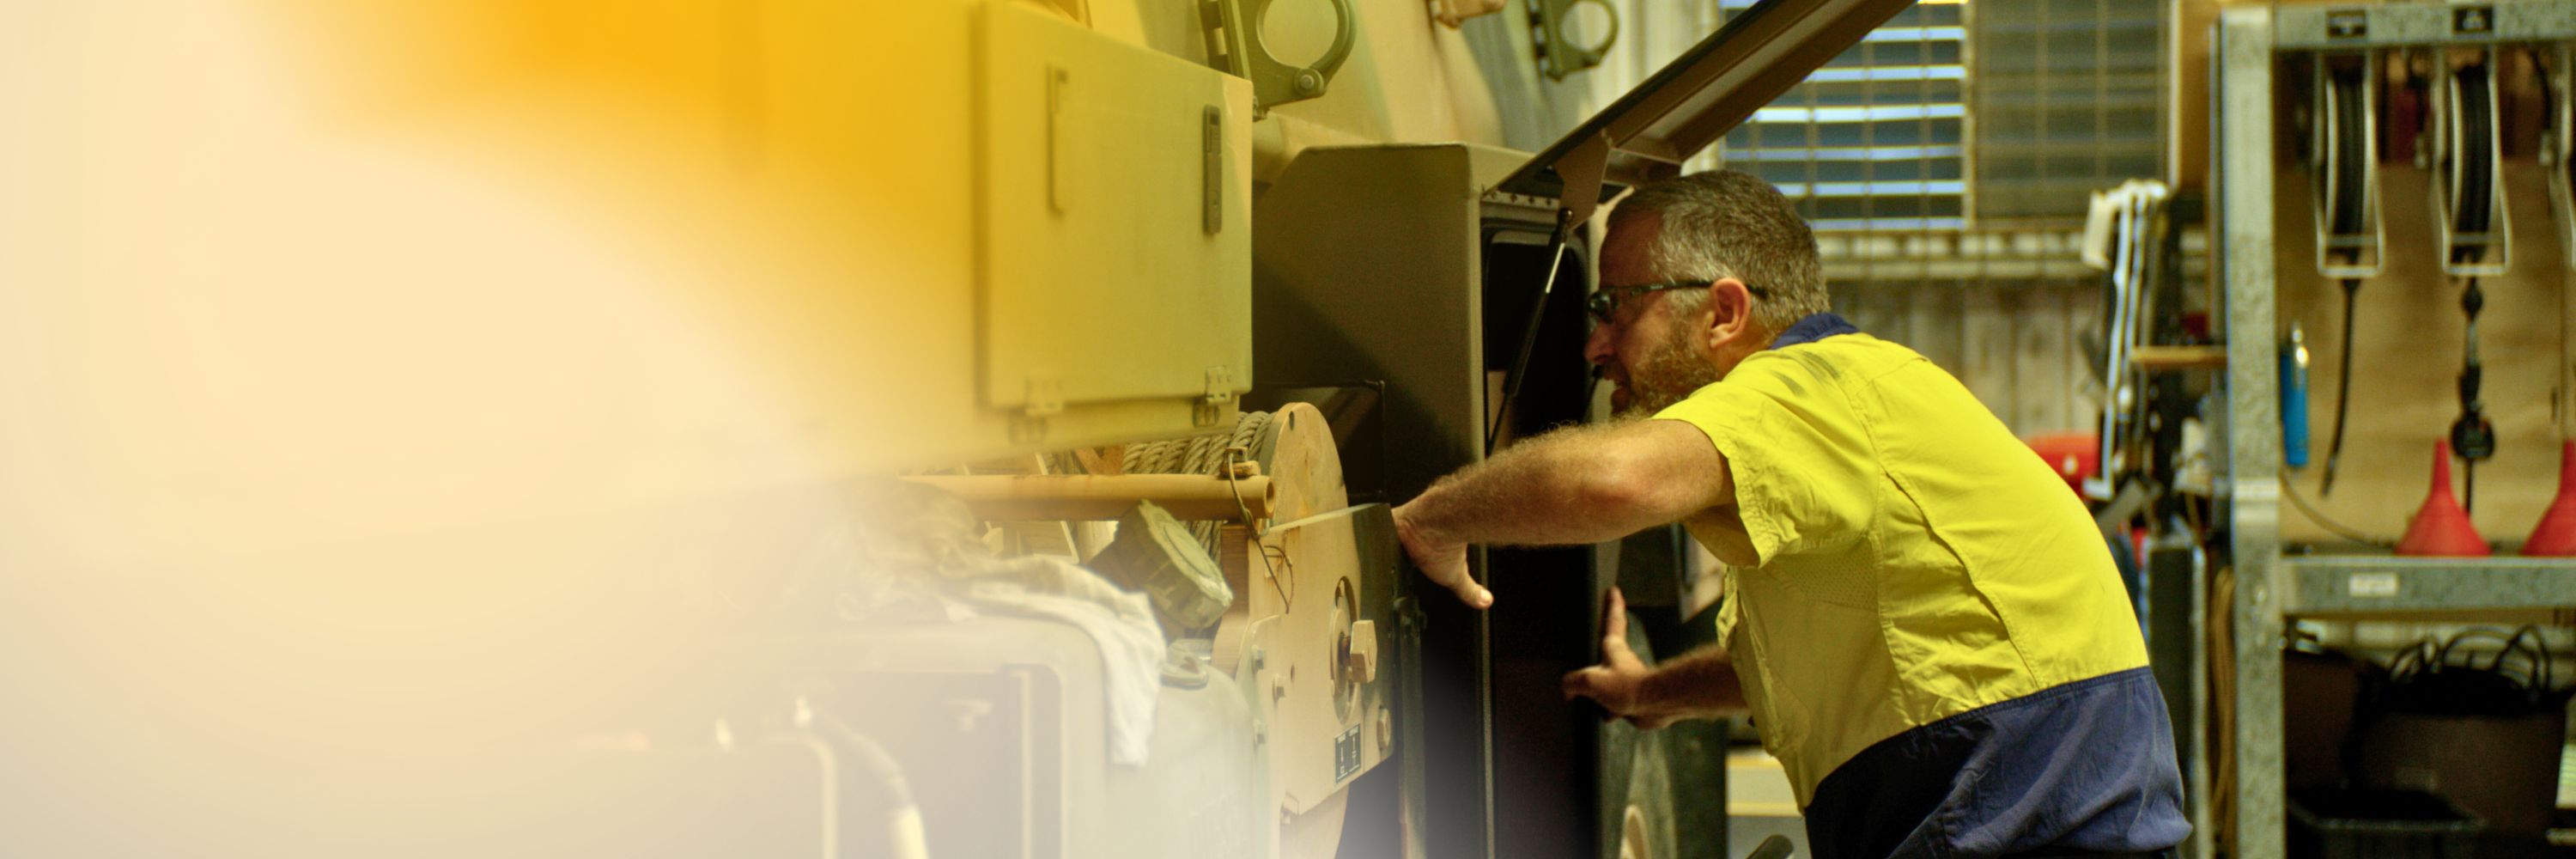 men in a yellow shirt working as a heavy vehicle mechanic